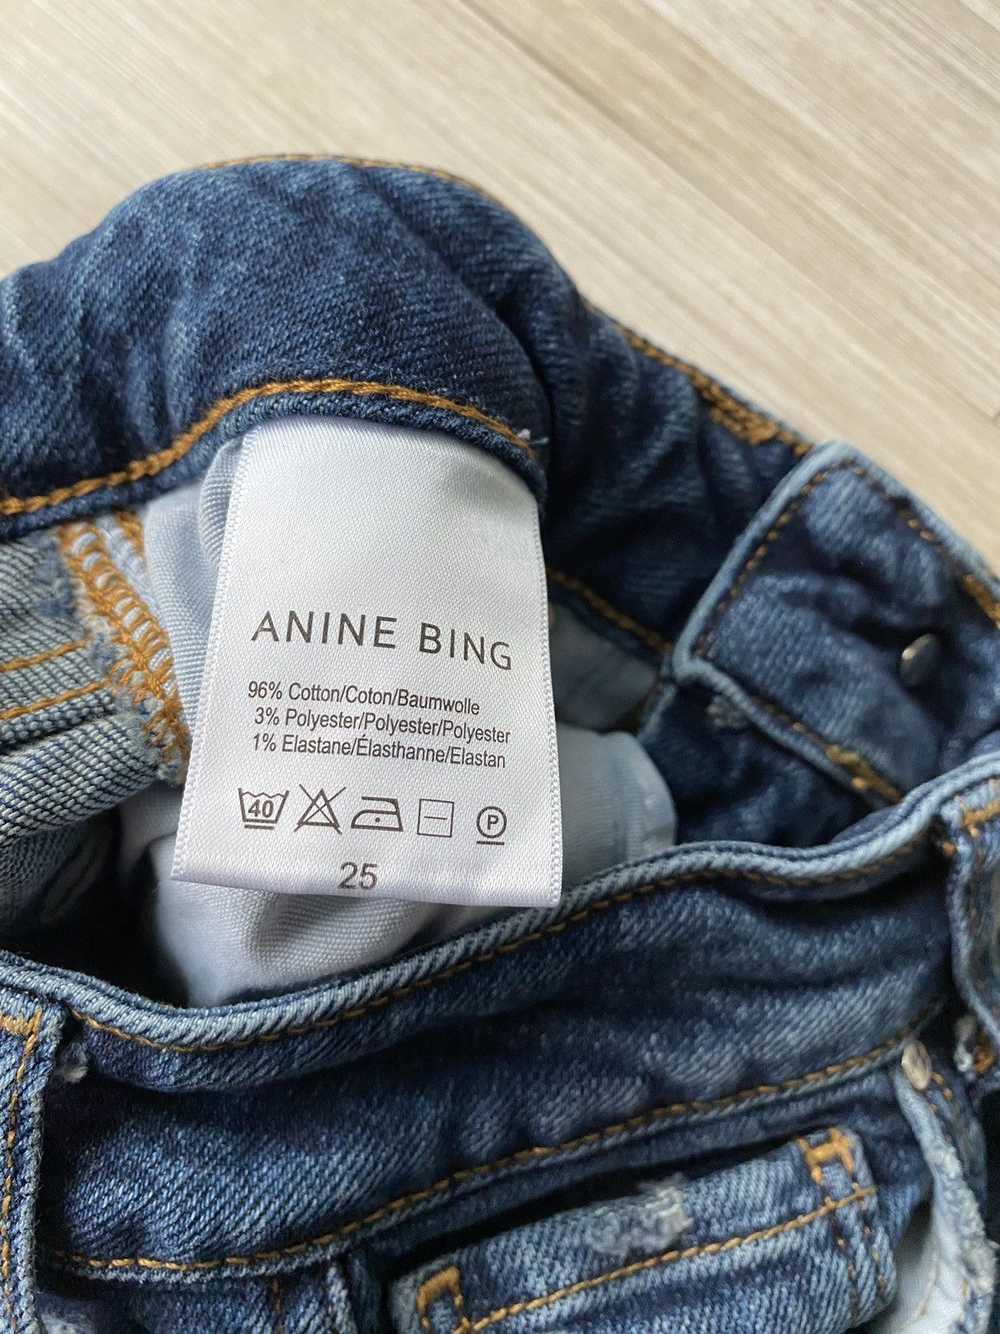 Anine Bing Anine Bing Jagger jeans 25 - image 5